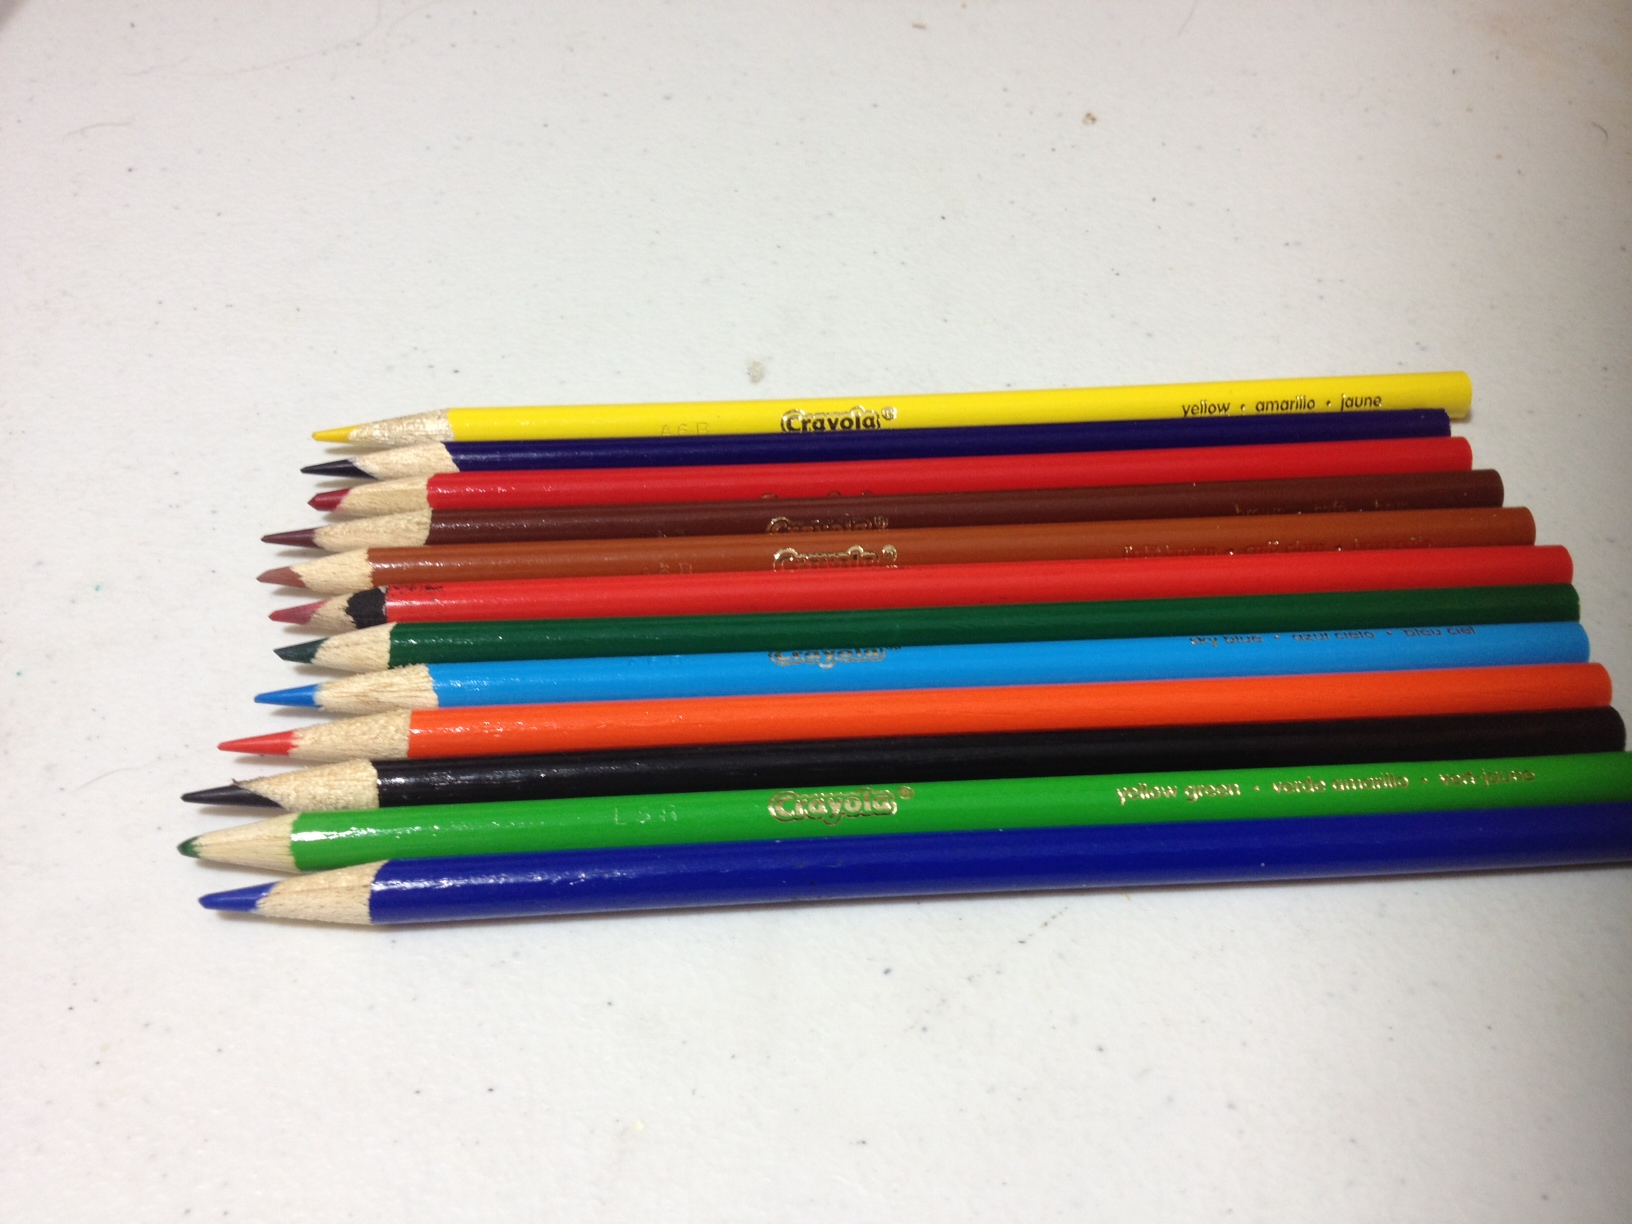 https://artsupplycritic.files.wordpress.com/2012/08/crayola-pencils.jpg